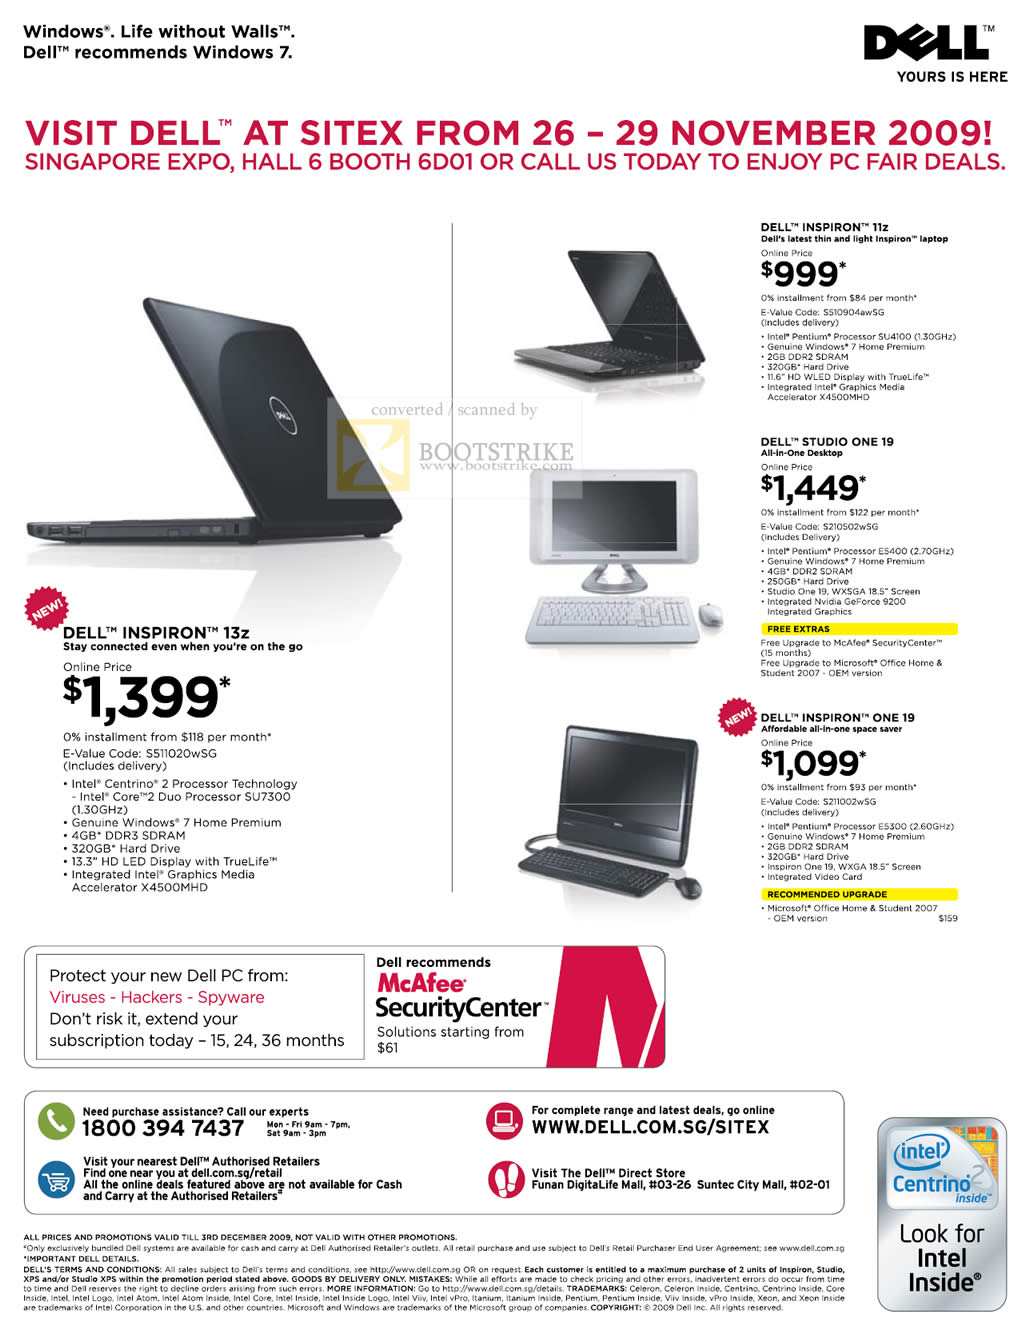 Sitex 2009 price list image brochure of Dell Inspiron 11z Studio One 19 13Z Notebooks Desktop PC